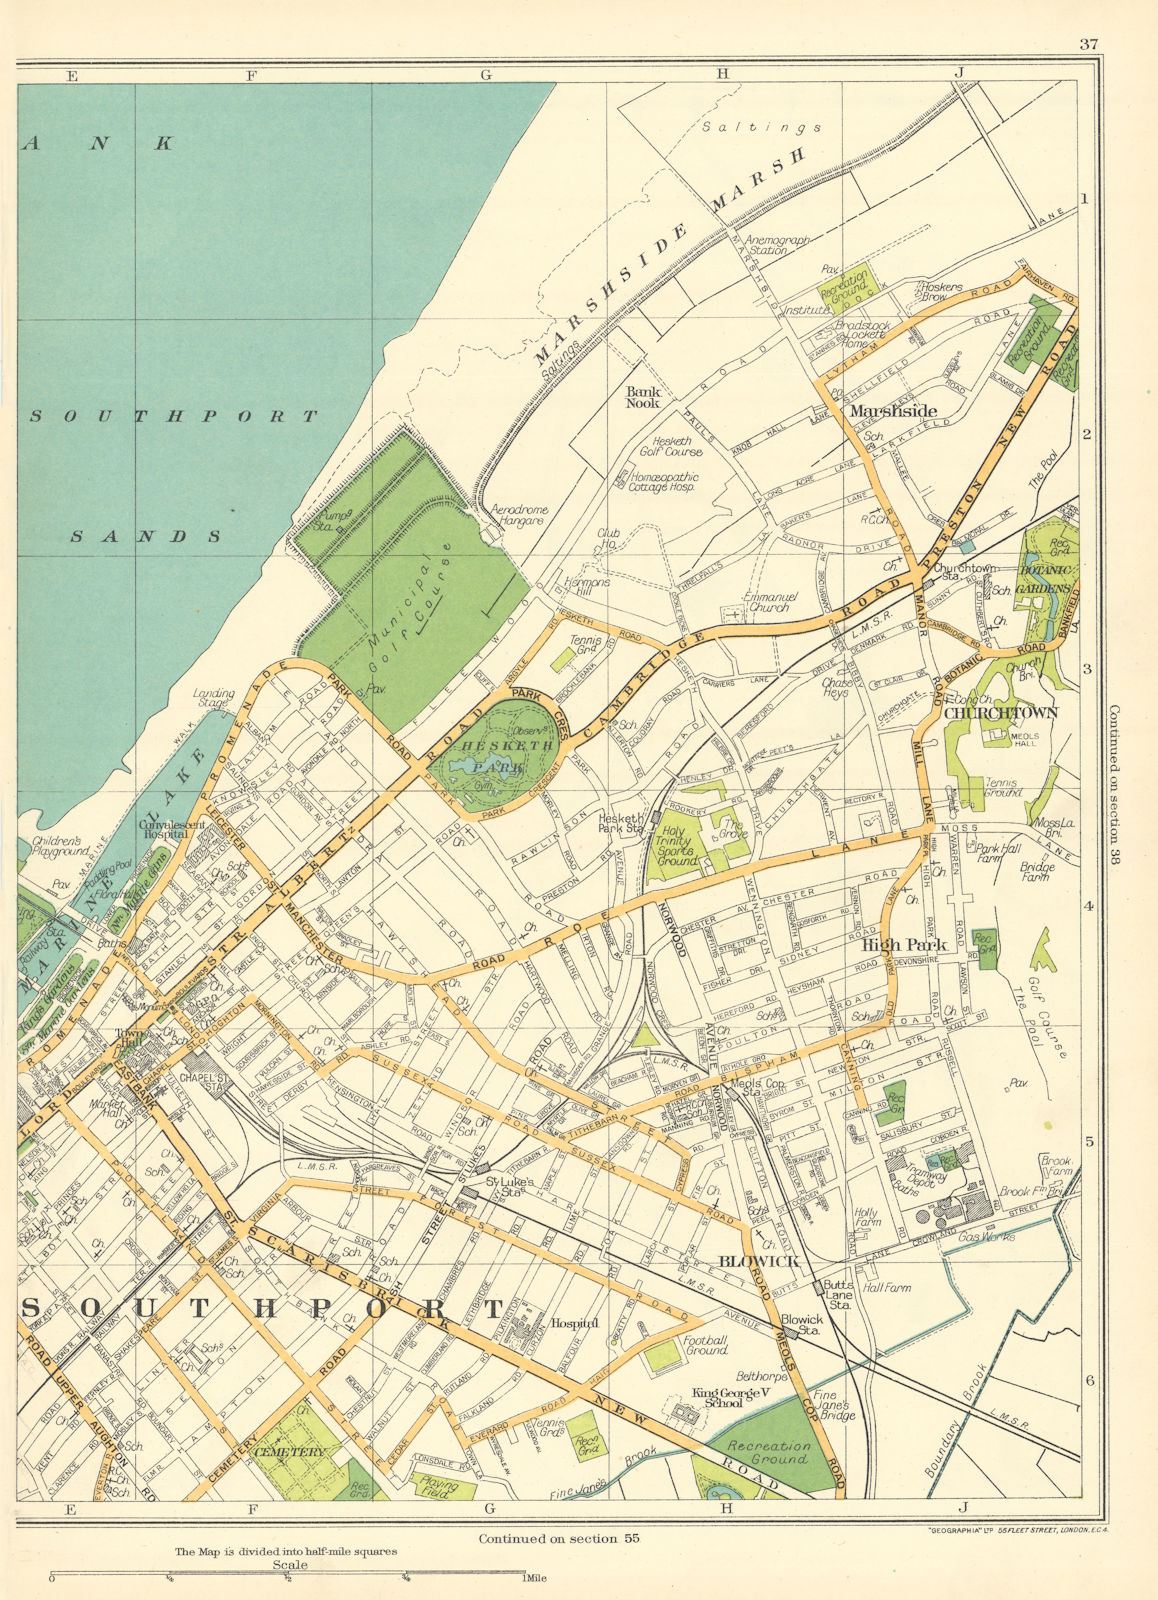 LANCASHIRE Southport Blowick High Park Churchtown Marshside Marsh 1935 old map